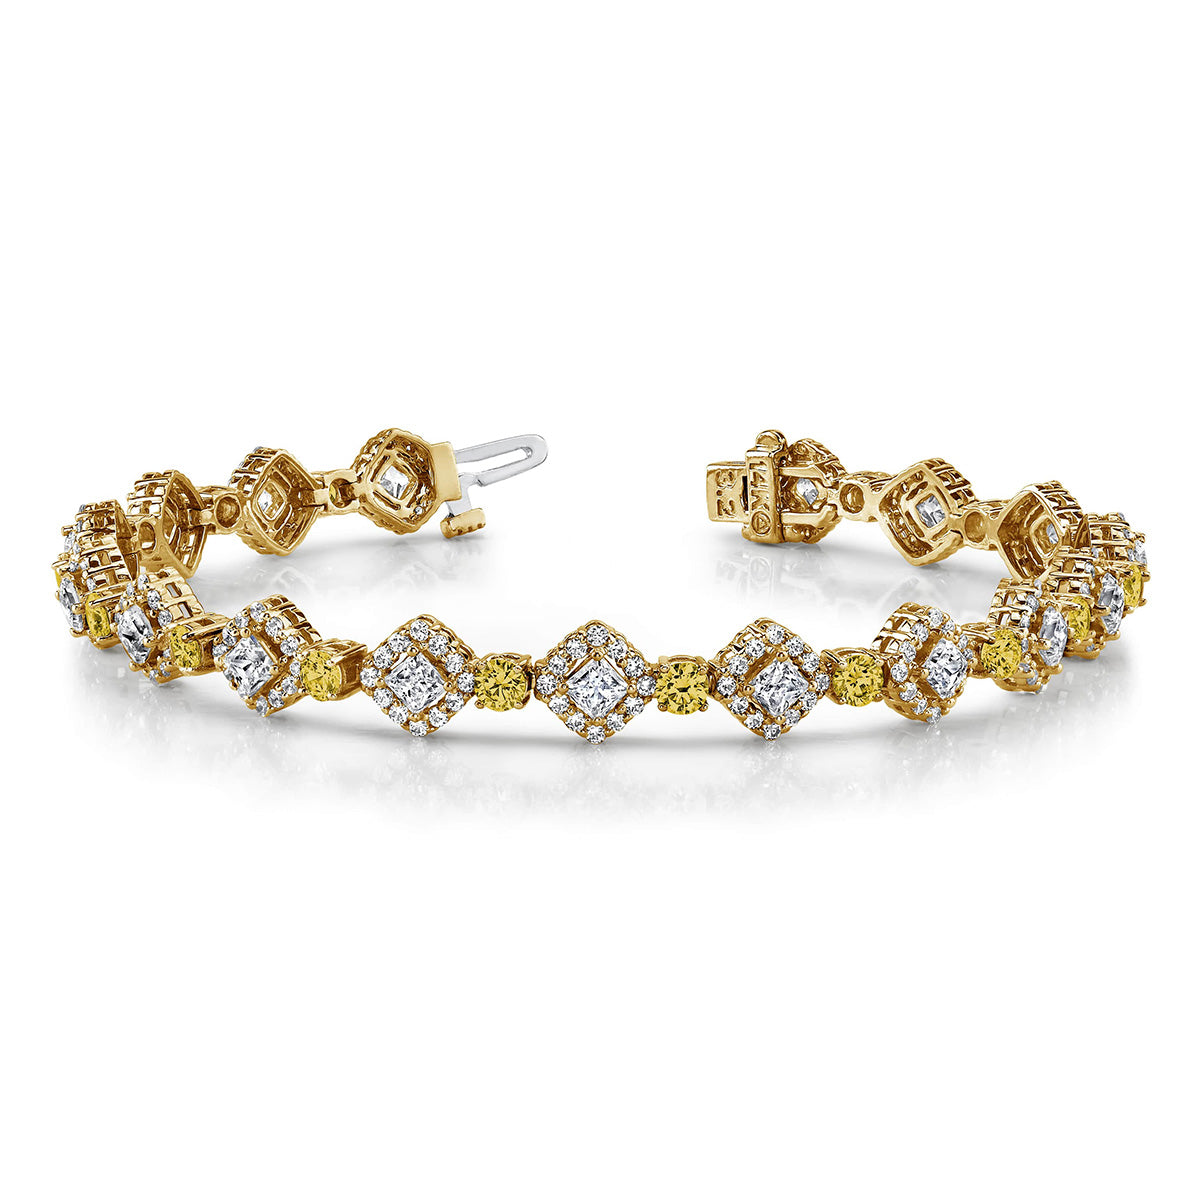 Princess Cut Diamond And Gemstone Bracelet